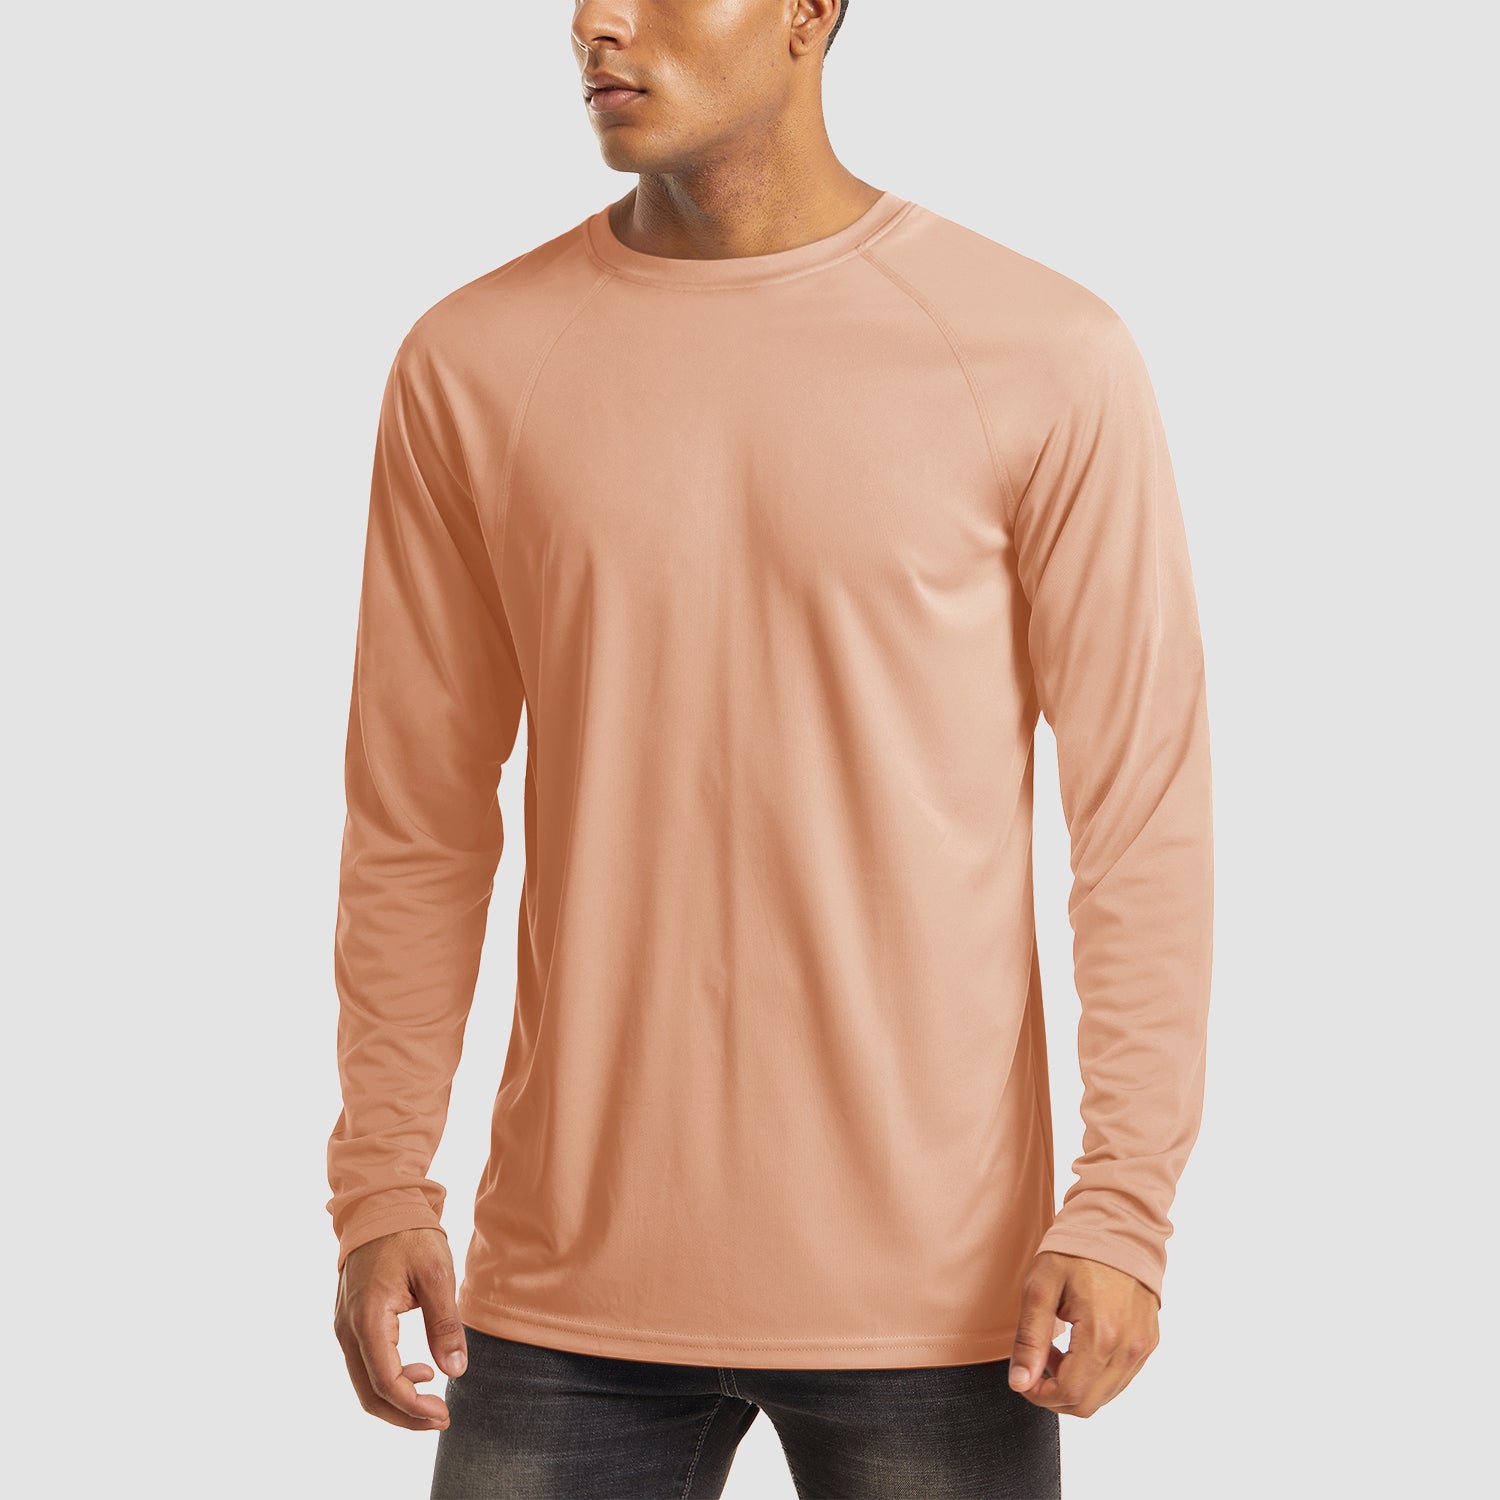 【Buy 4 Get 4th Free】Men's Long Sleeve Hooded Shirt UPF 50+ Athletic Shirt, Grey / M